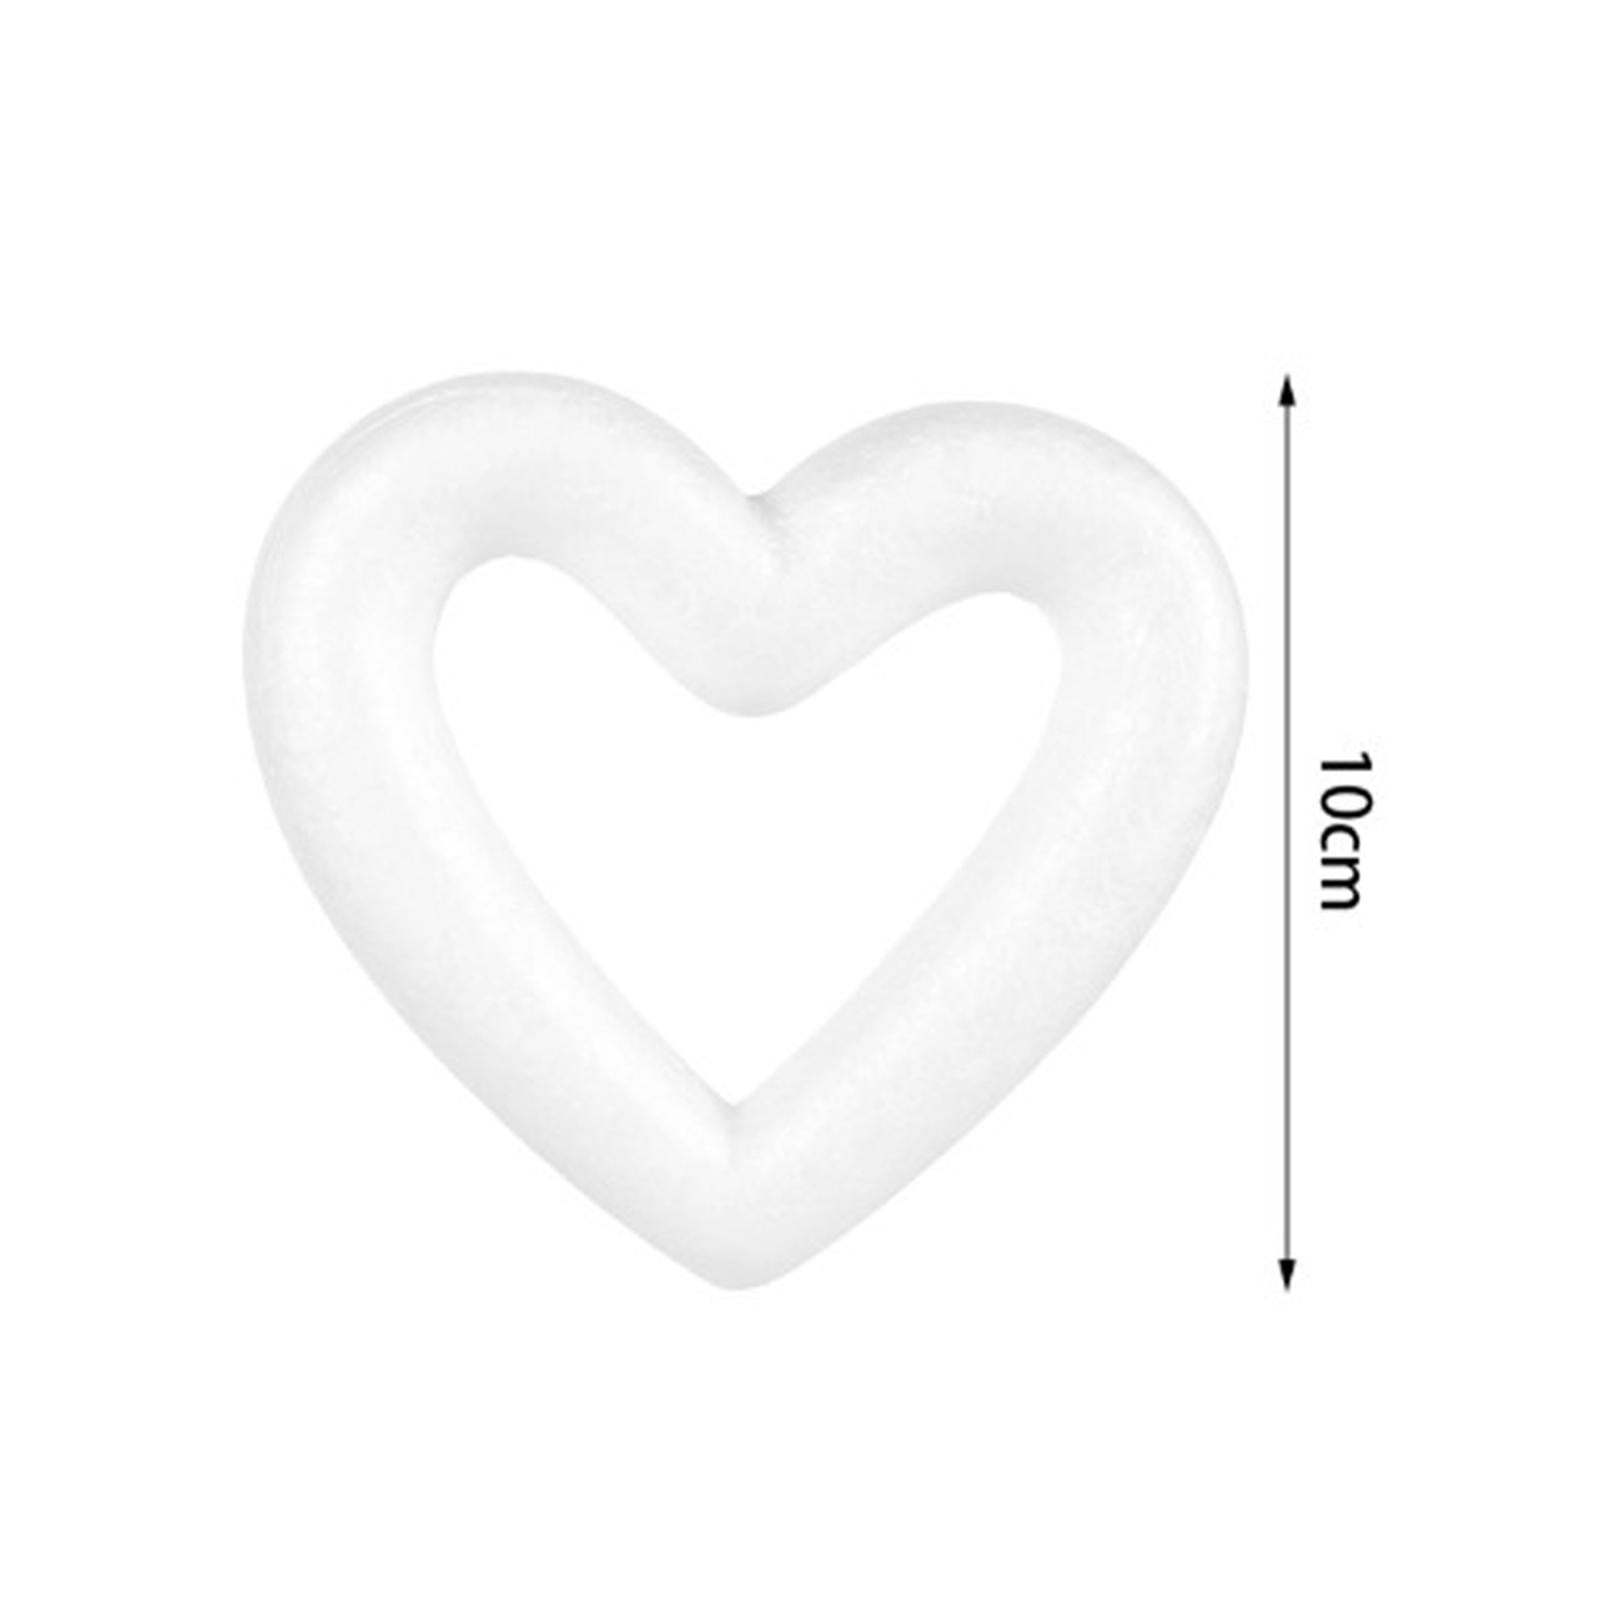 Buy Set of 6 Styrofoam Hearts, 11 Cm Polystyrene Hearts in Sets of